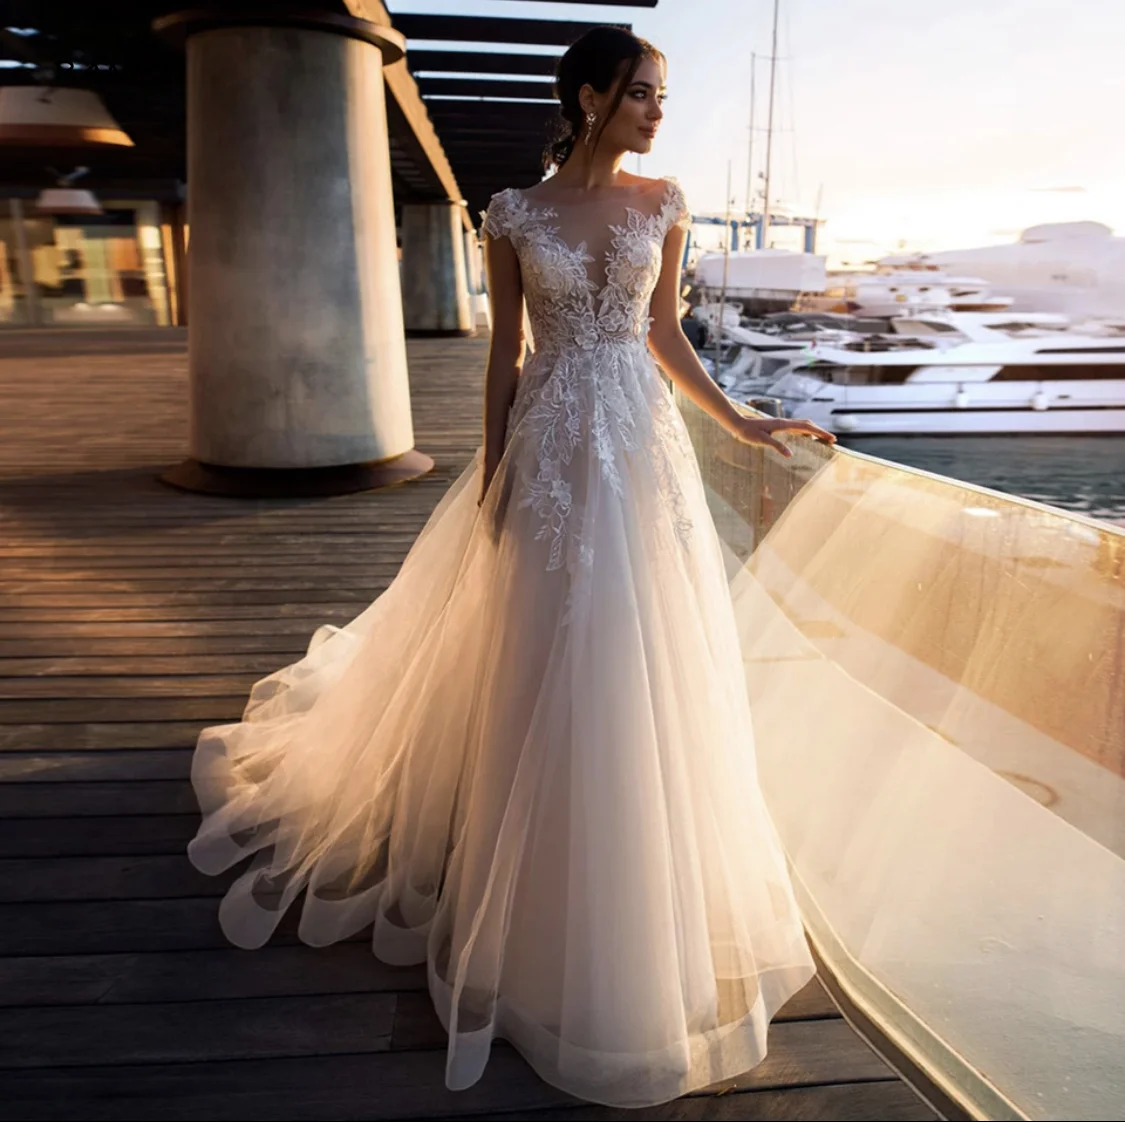 RANMO Wedding Dress 2021 A-Line Sheer Neck Cap Sleeve Lace Appliques Button Tulle Sweep Train Bride Gown Vestidos De Noiva